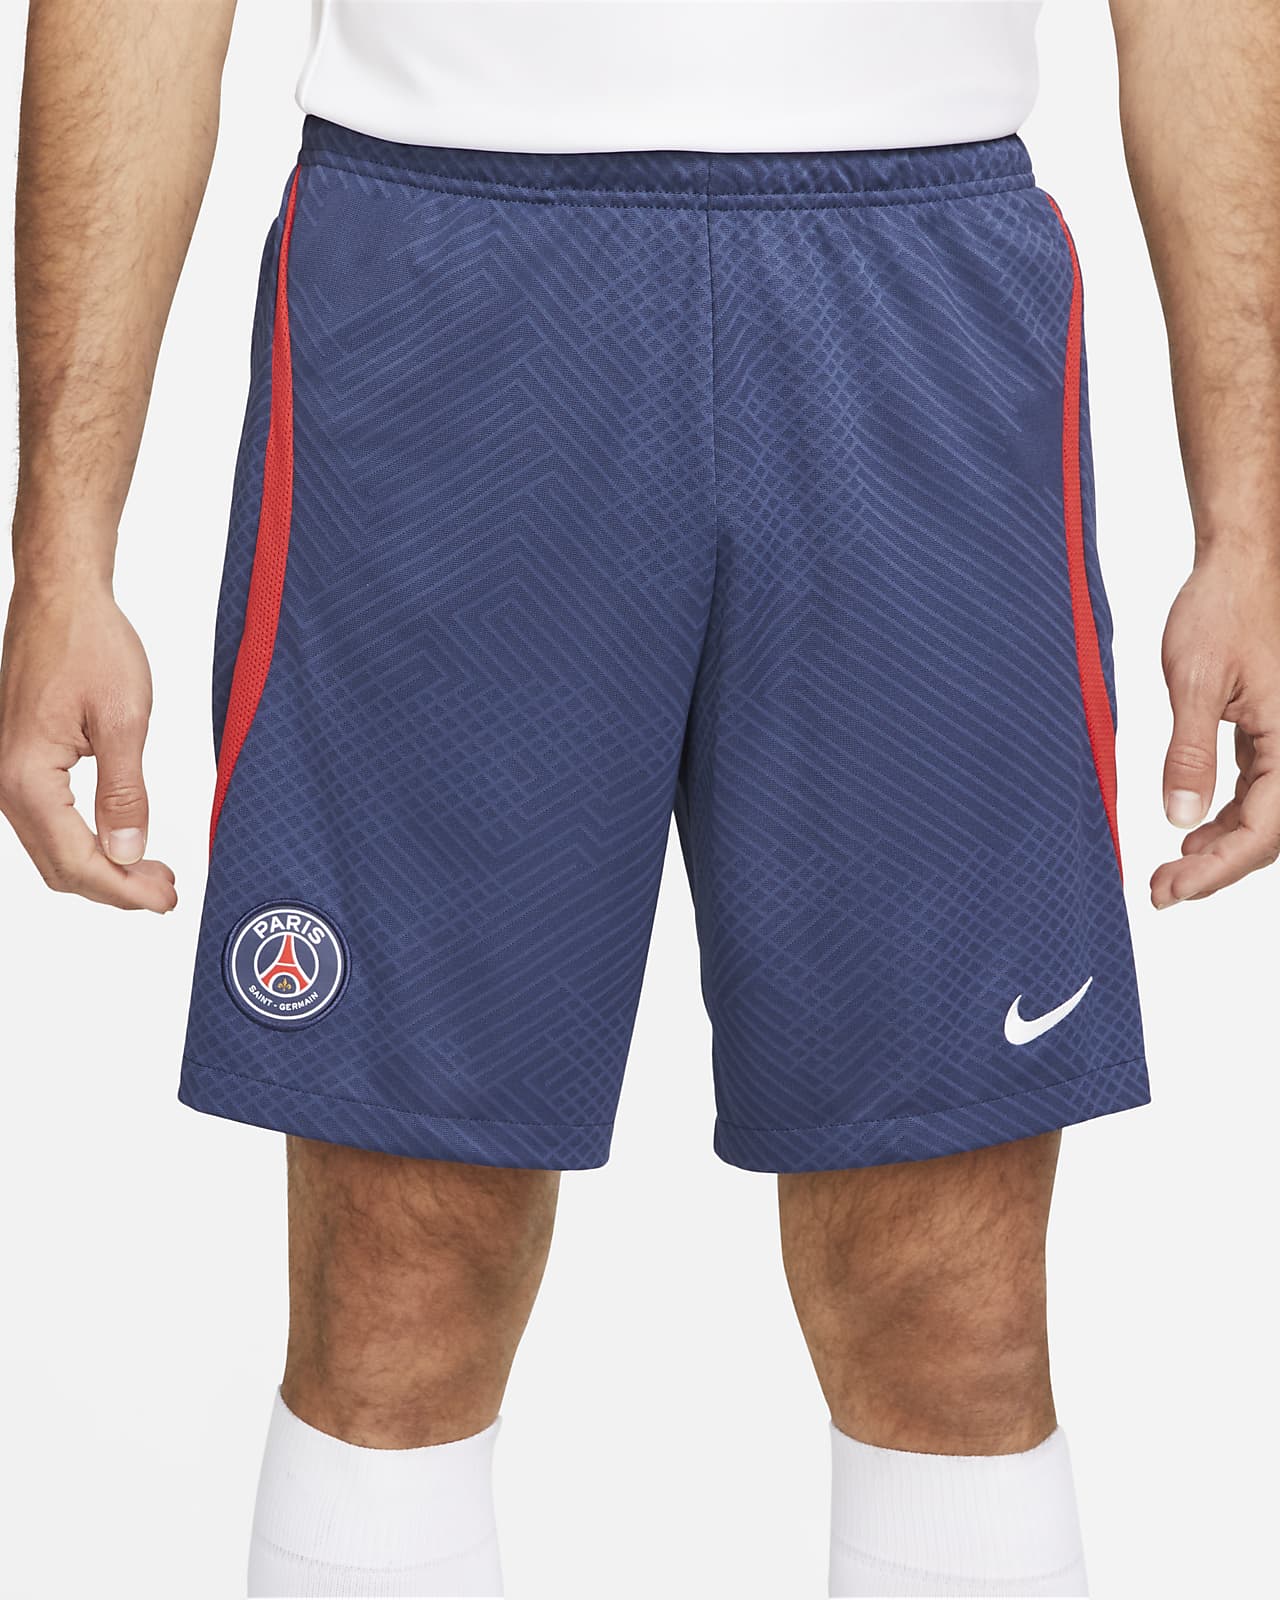 Paris Saint Germain Football Soccer Suit Shorts Jersey Shirt Nike 2014  Youth M